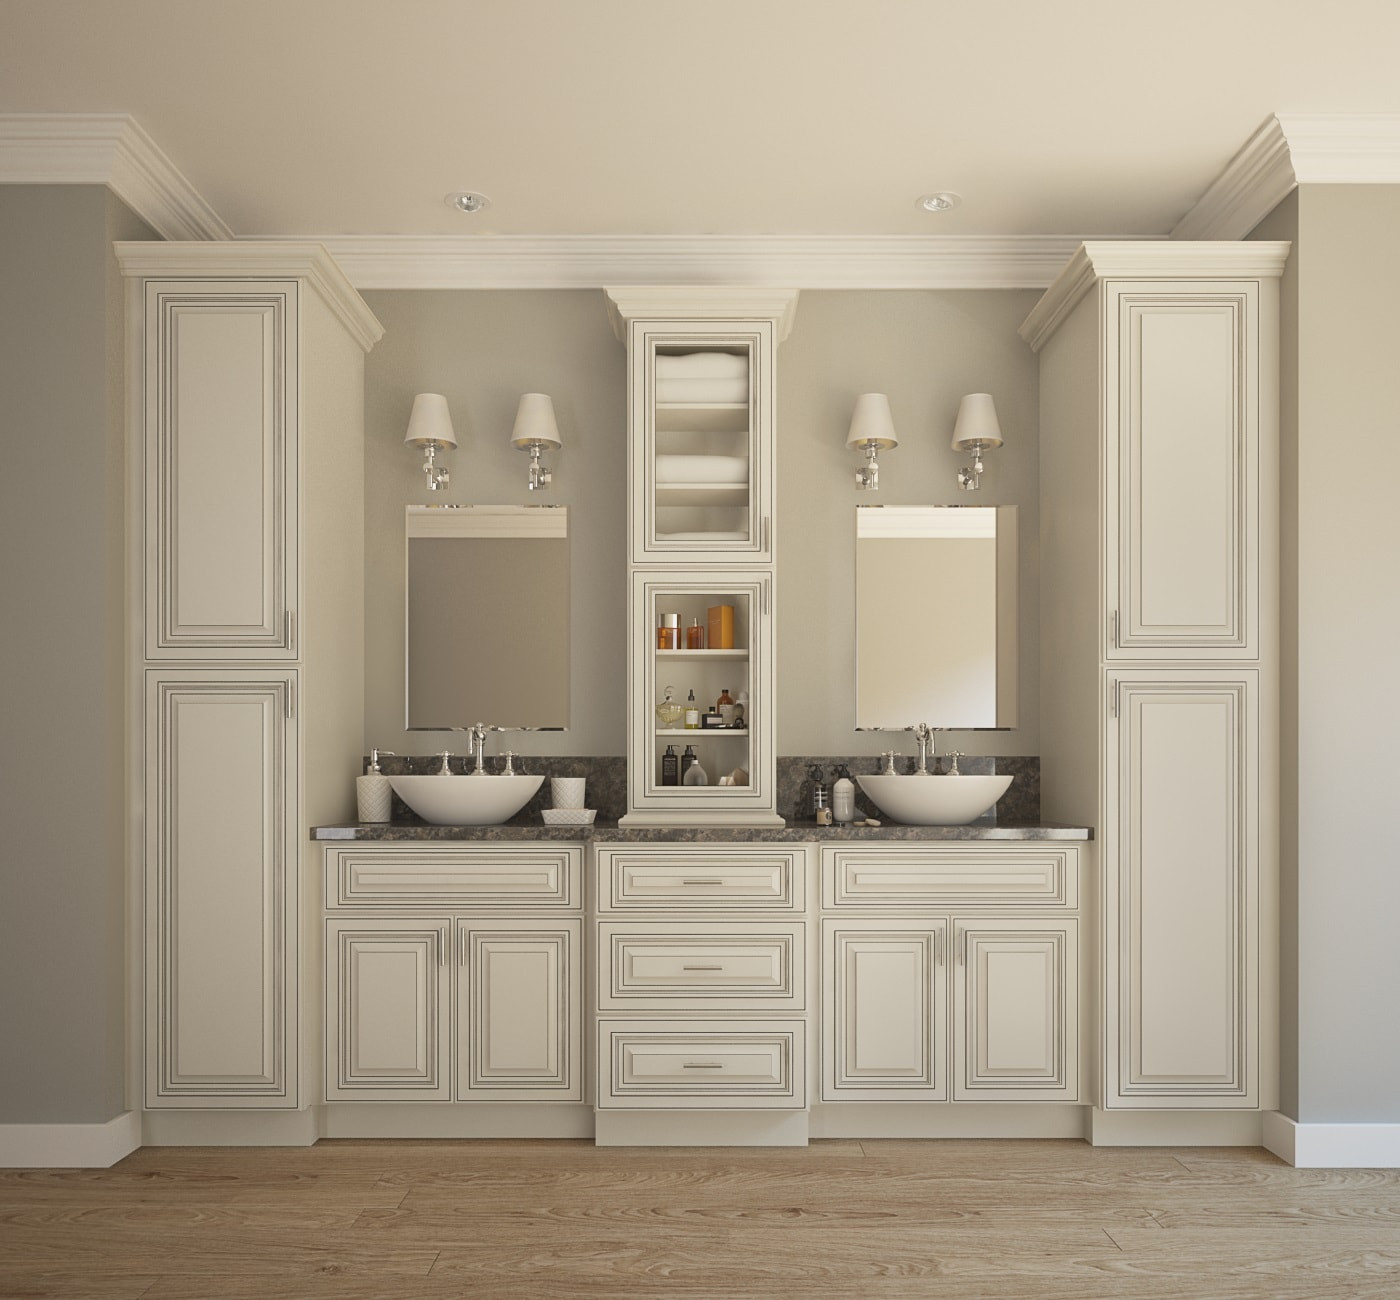 Cabinets To Go Bathroom Vanities
 Signature Vanilla Glaze Ready to Assemble Bathroom